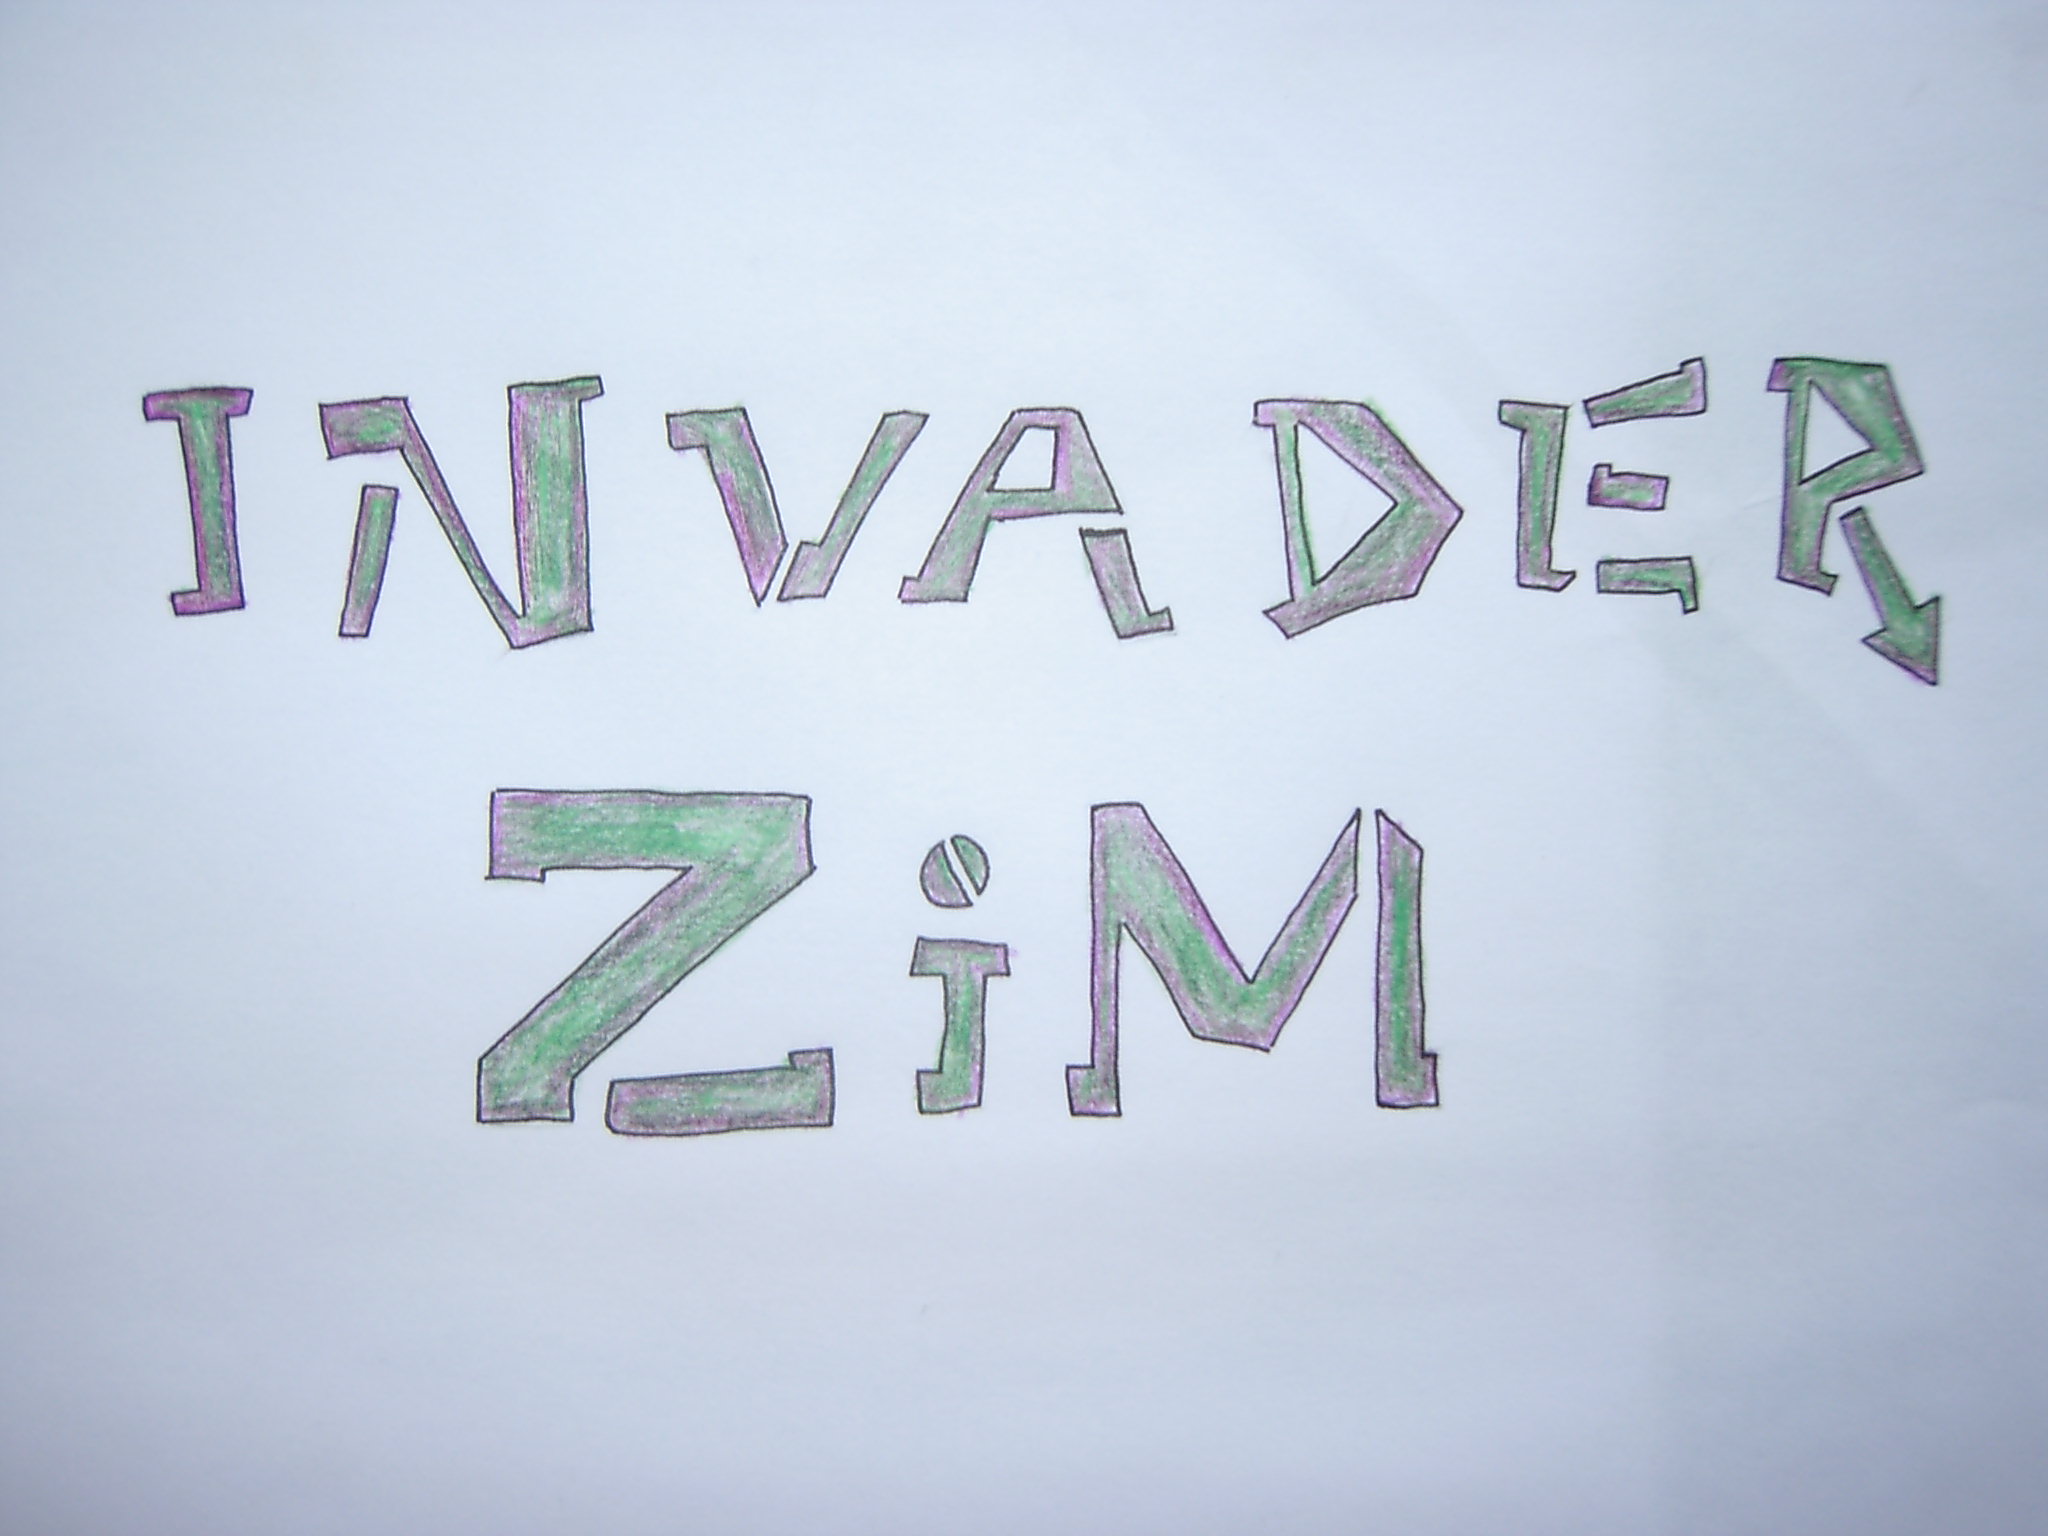 Invader Zim "text" by kockanock